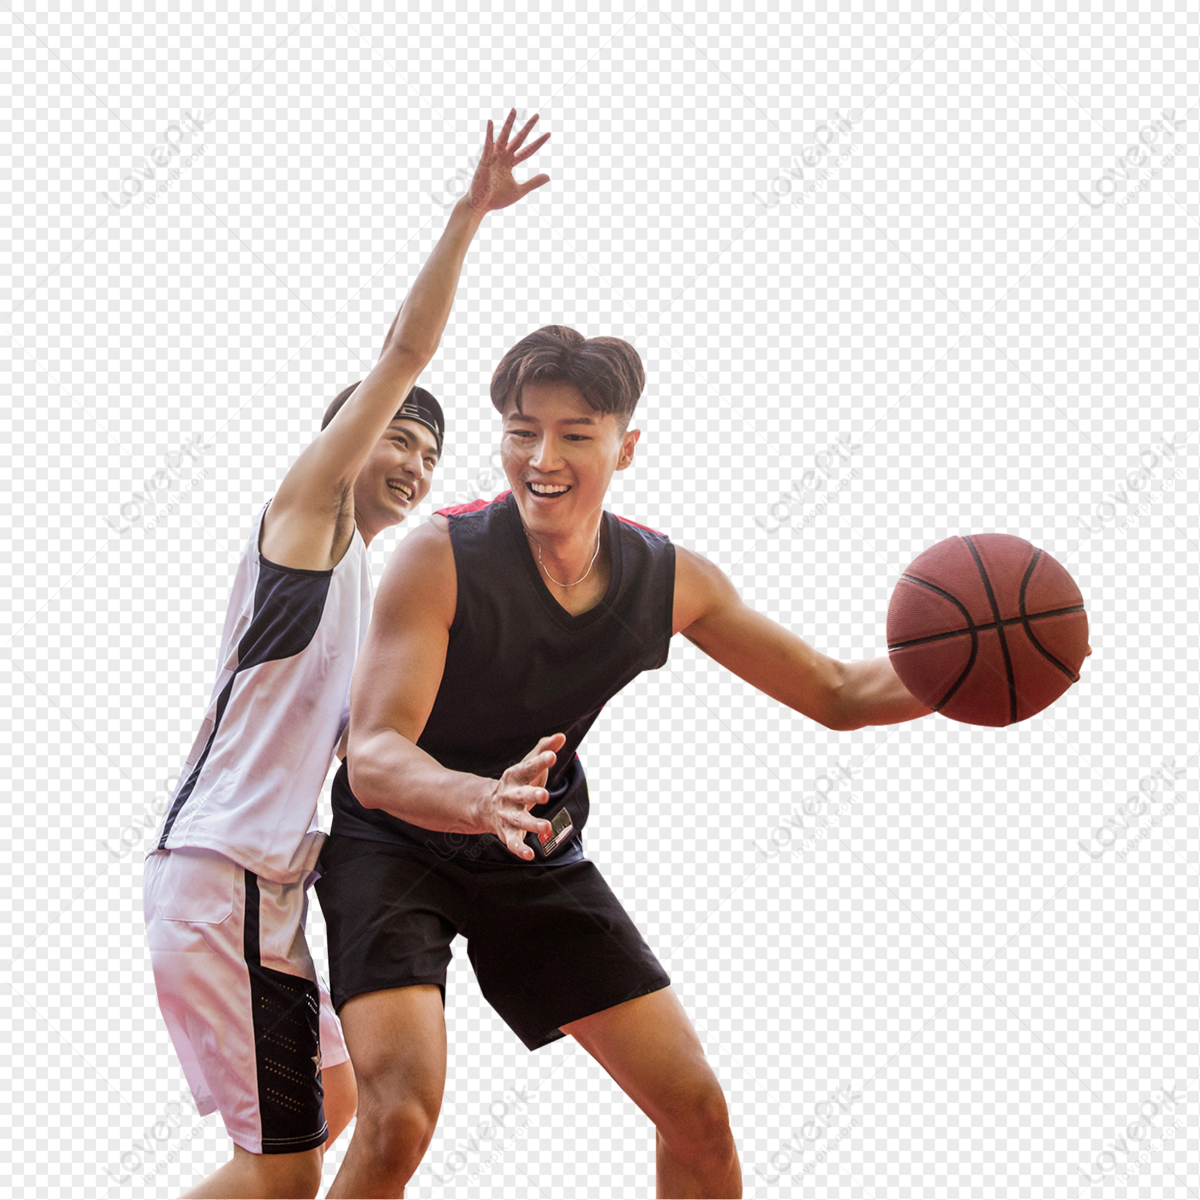 Картинки баскетбола PNG расширения. Manager Play a Basketball PNG. O`zbek Basketball PNG. L like playing